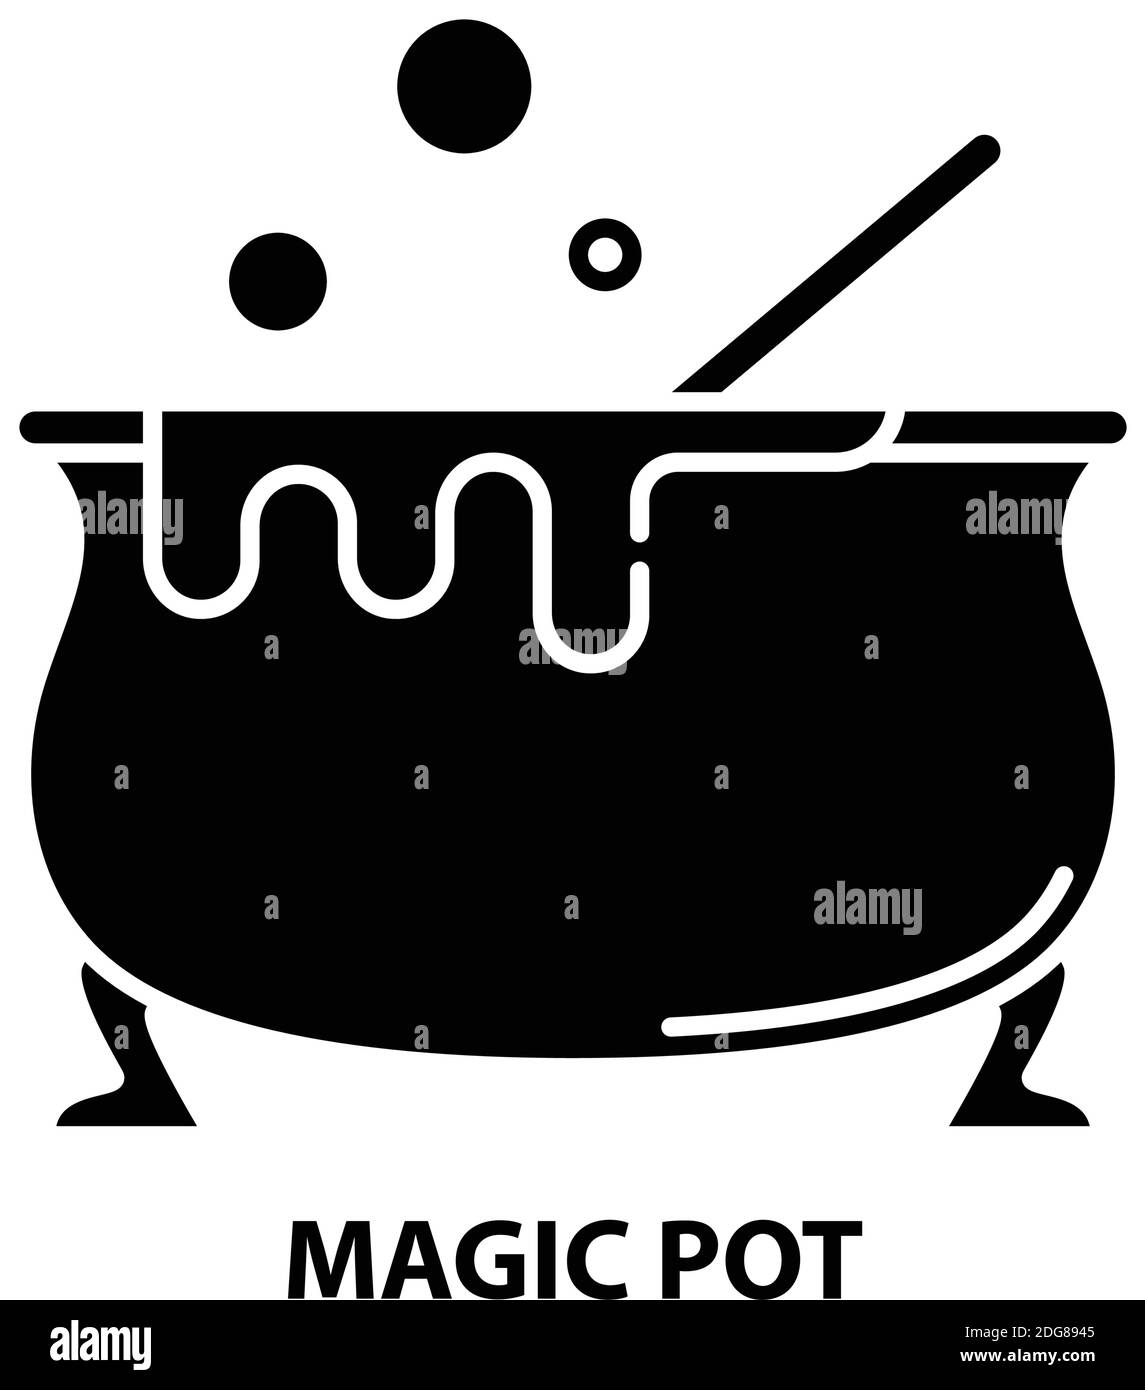 Magic pot Black and White Stock Photos & Images - Alamy